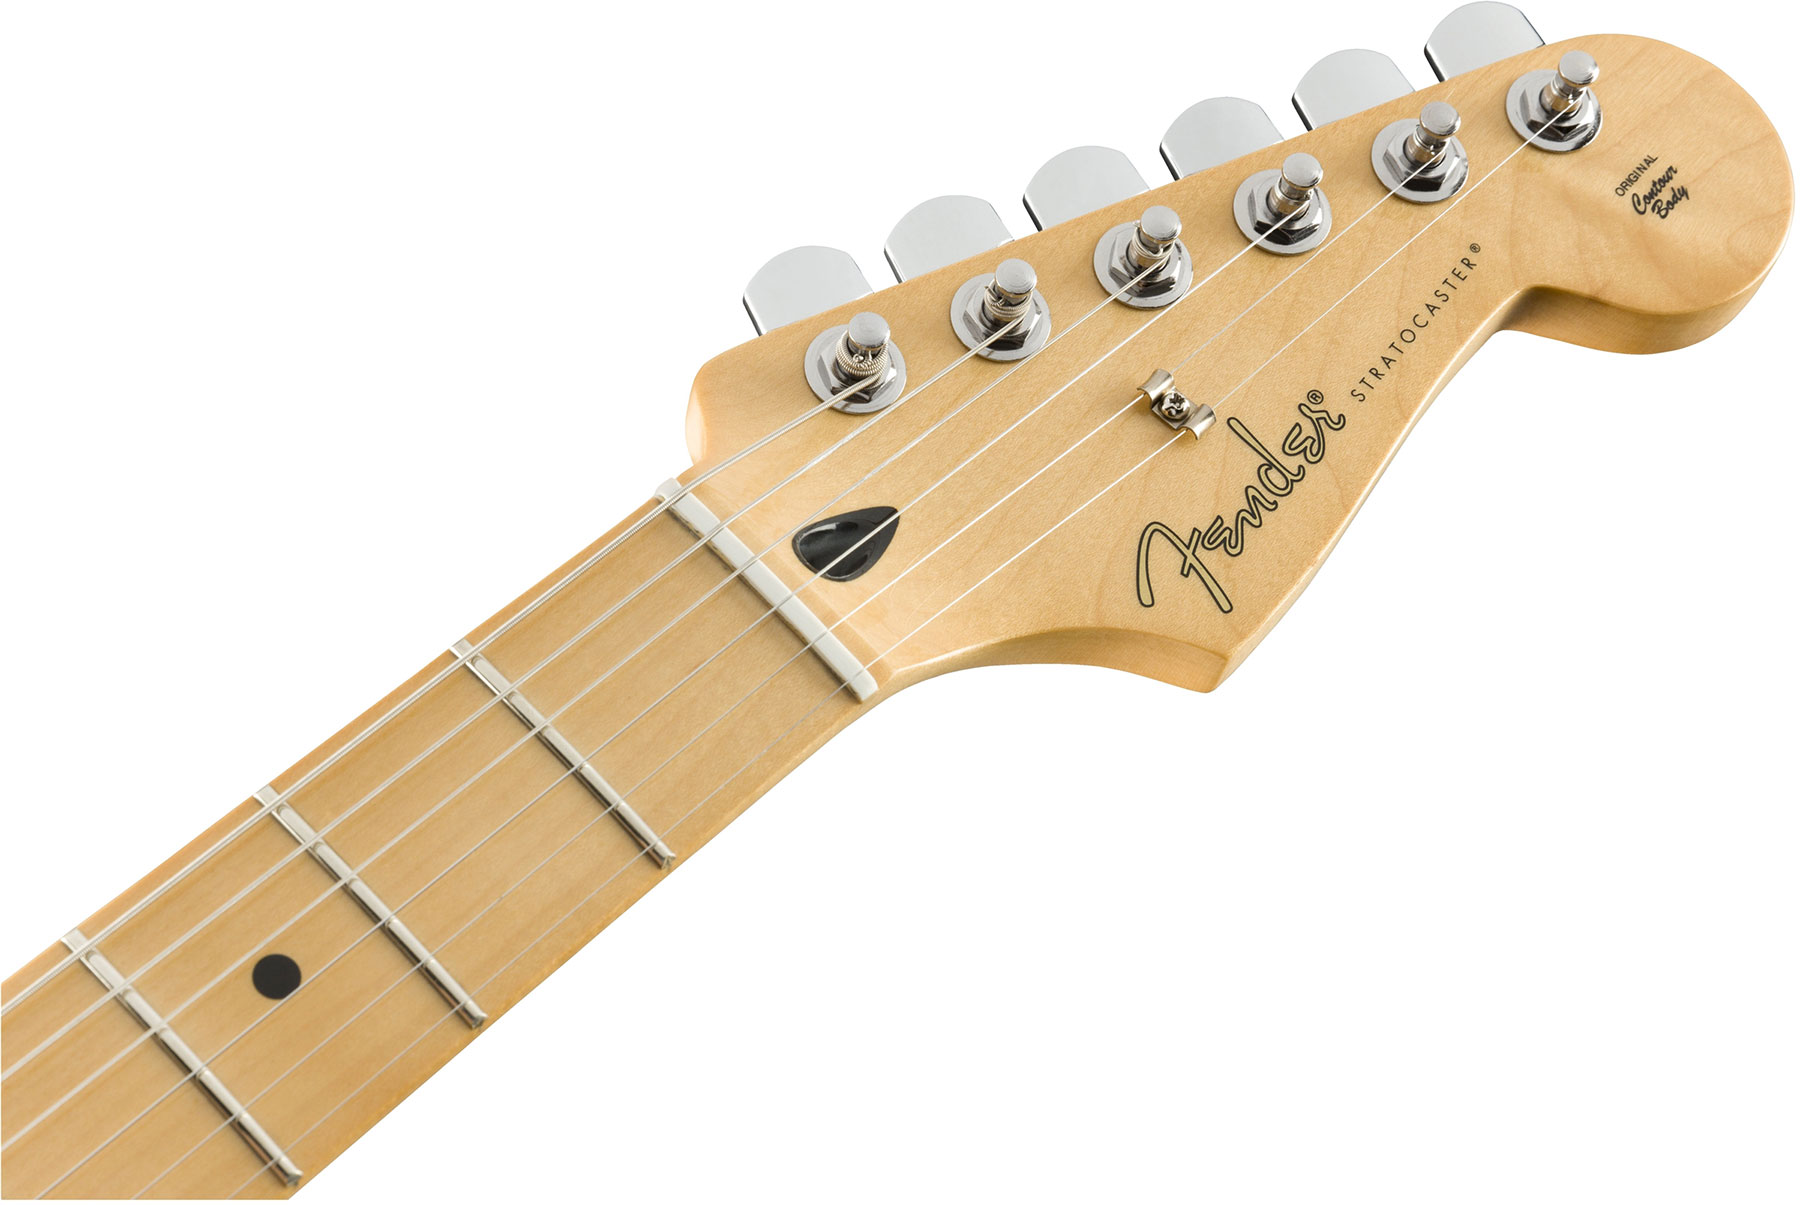 Fender Strat Player Hss Plus Top Fsr Ltd 2019 Mex Mn - Sienna Sunburst - Str shape electric guitar - Variation 1